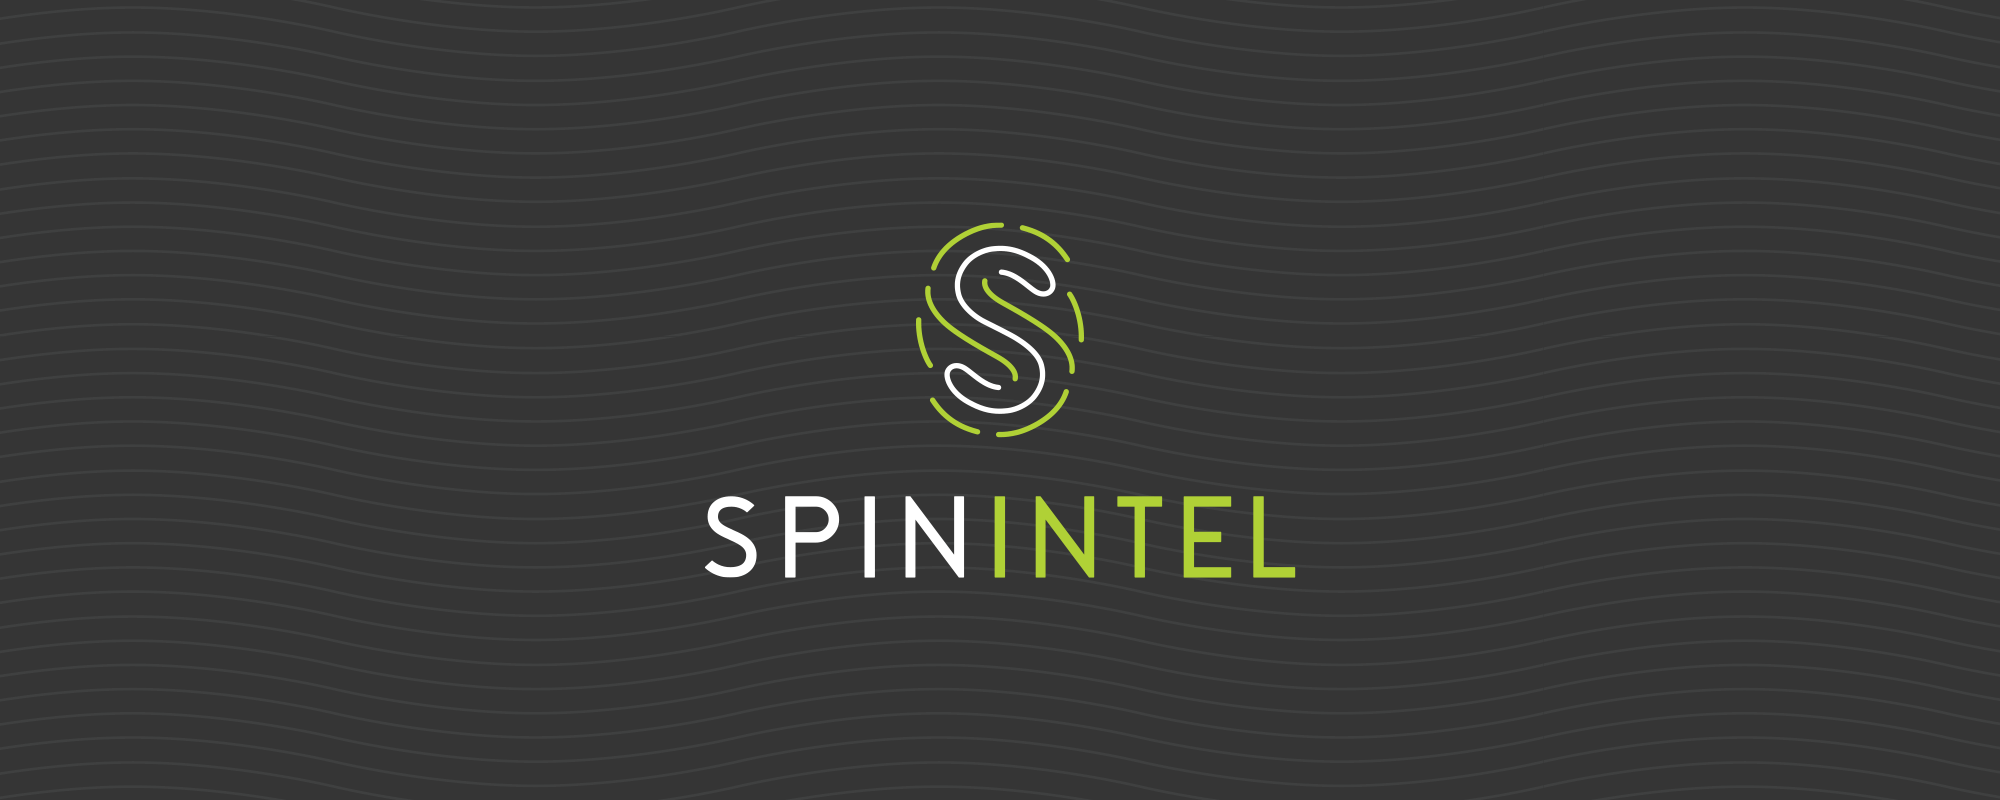 SpinIntel branding logo design